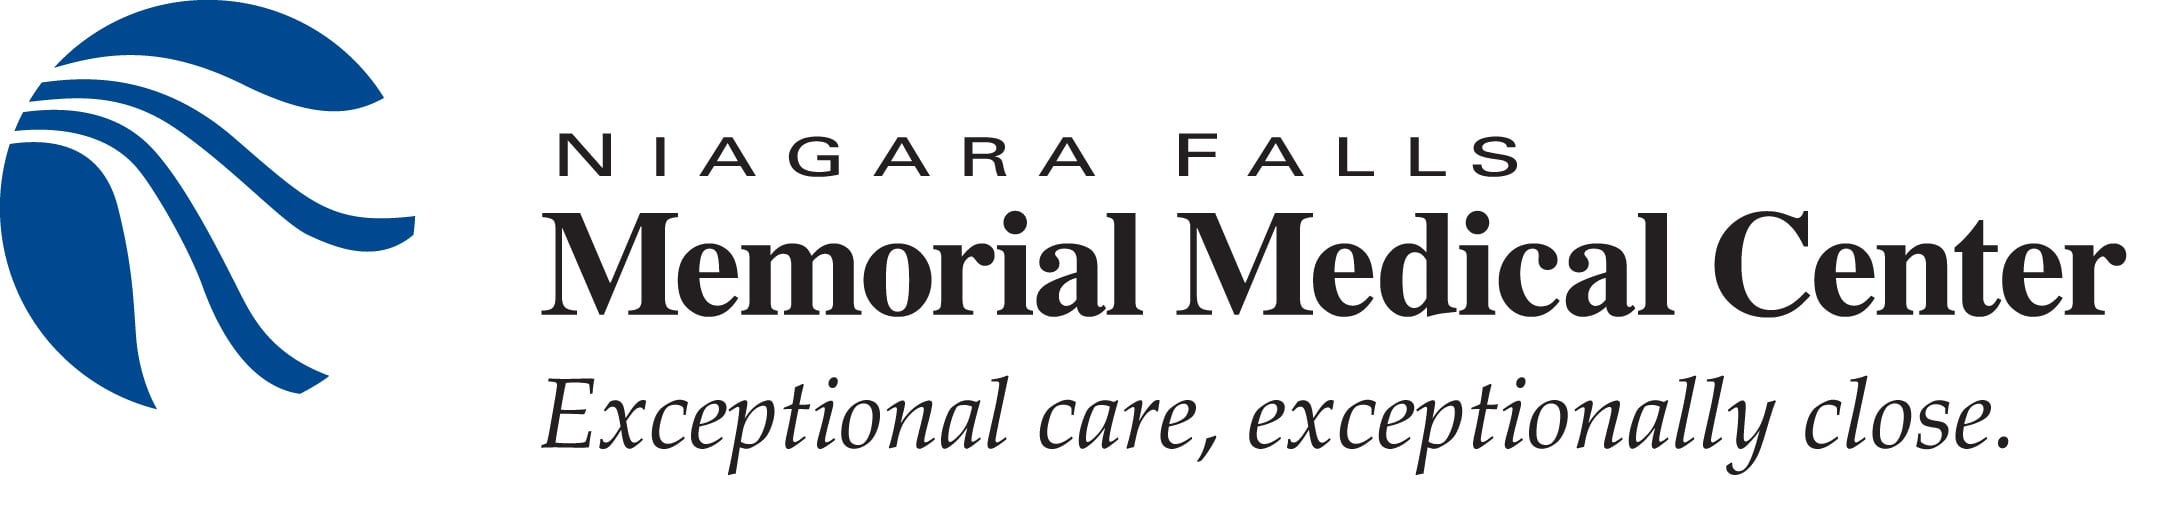 Niagara Falls Memorial Medical Center - Exceptional care, exceptionally close - logo